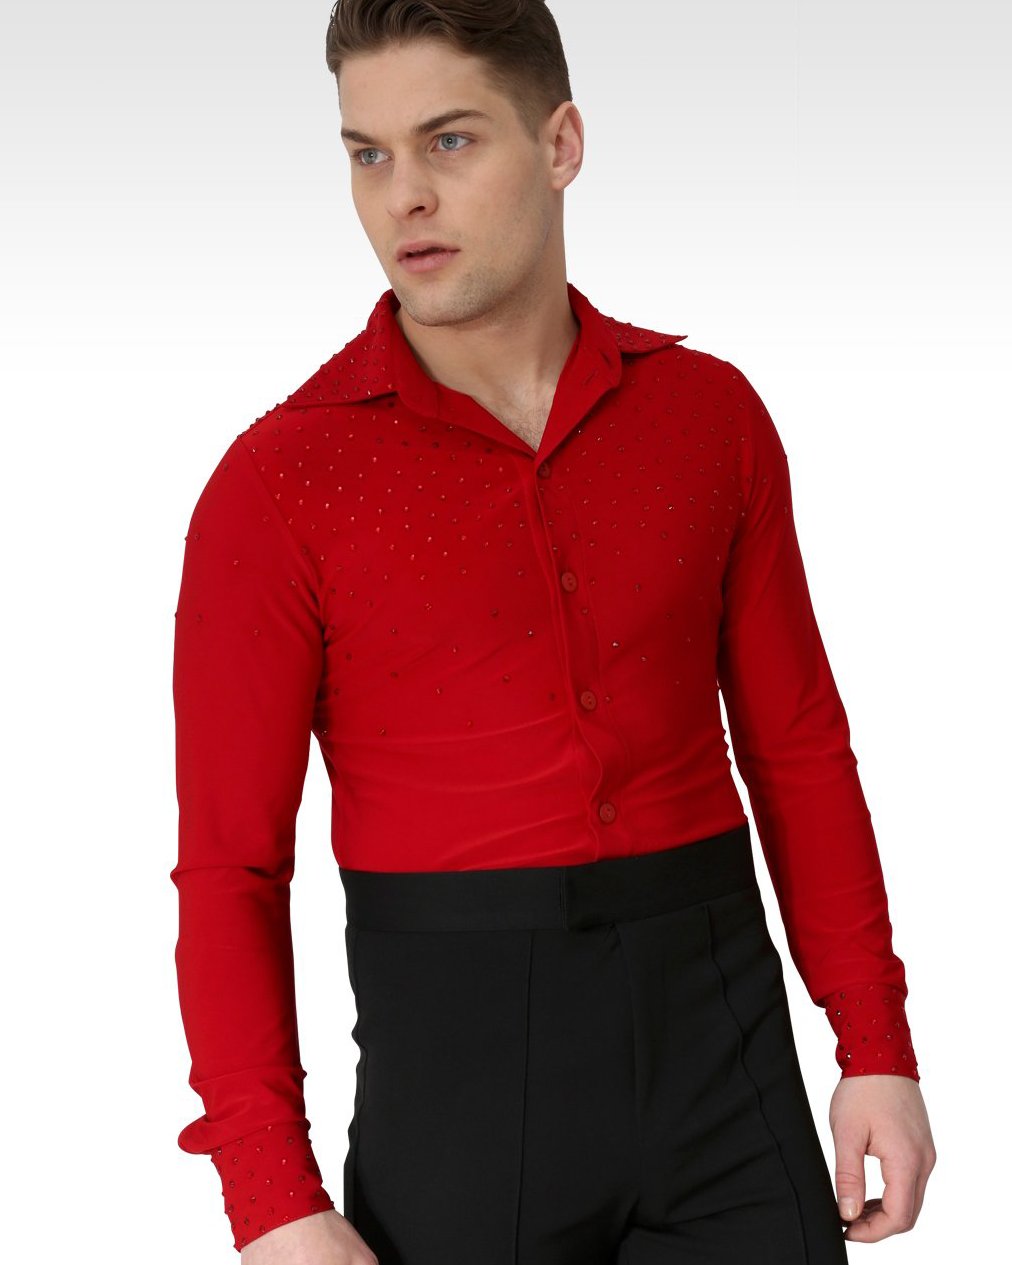 Dilan Dance Shirt Red